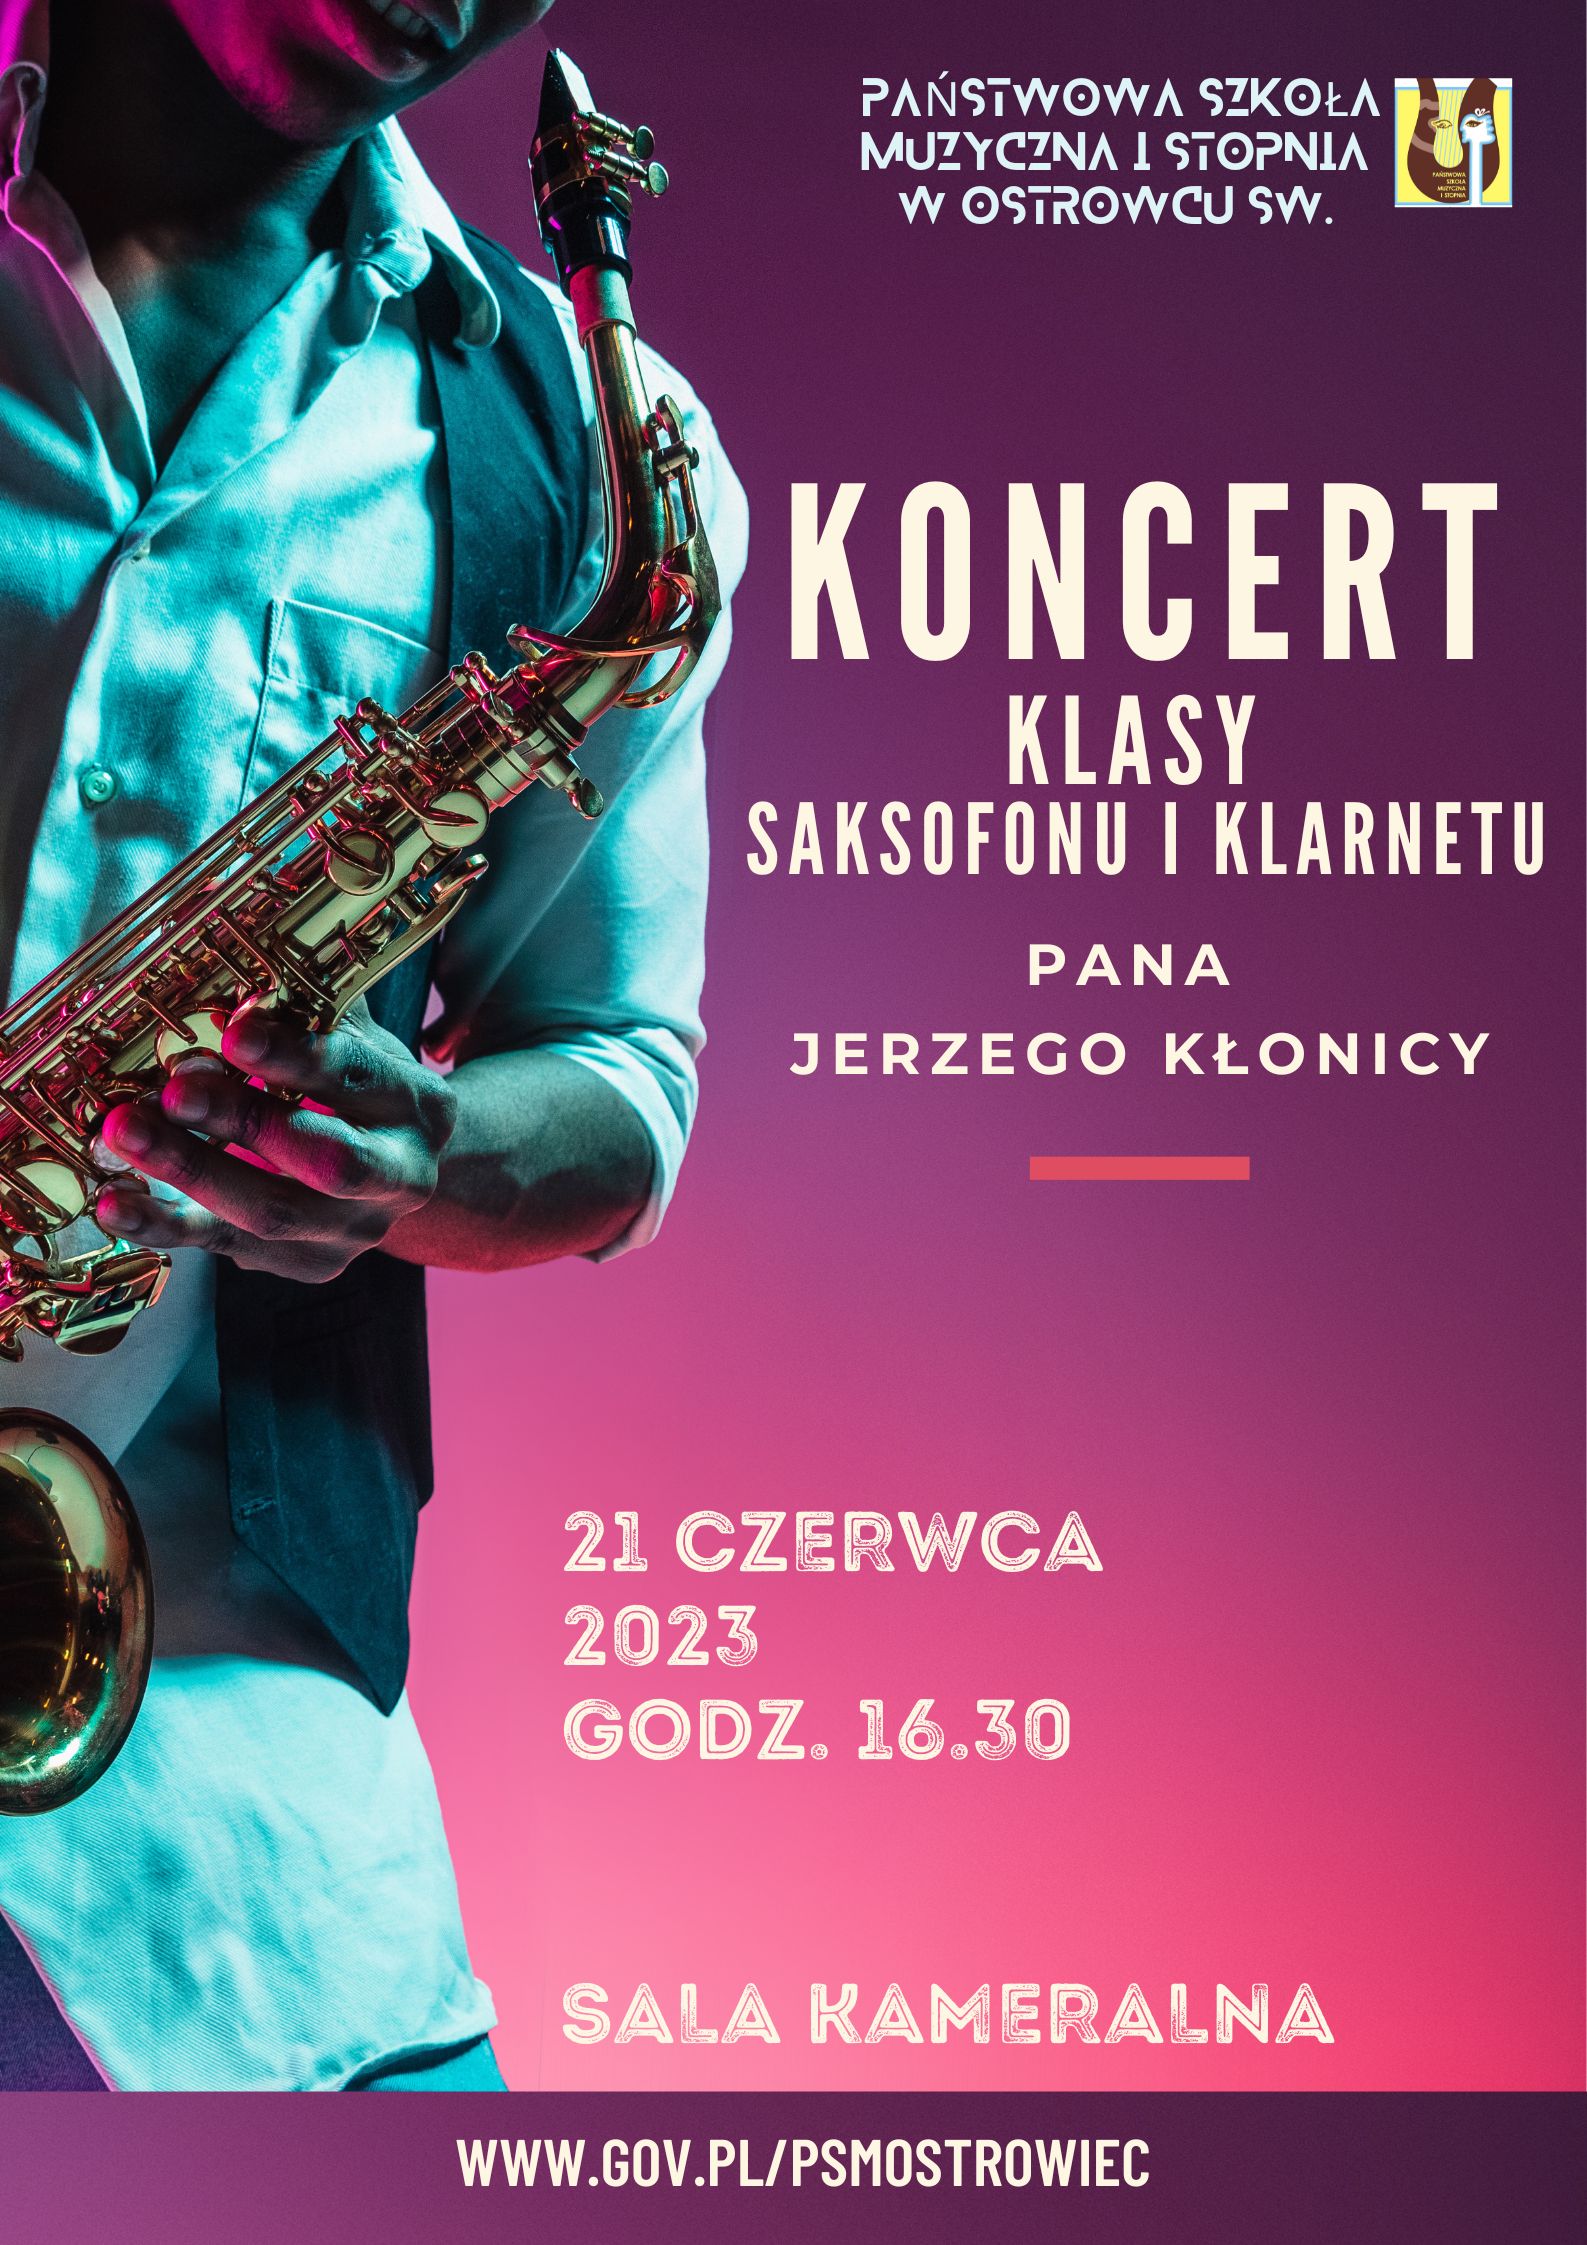 Koncert klasy saksofonu i klarnetu p. Jerzego Kłonicy